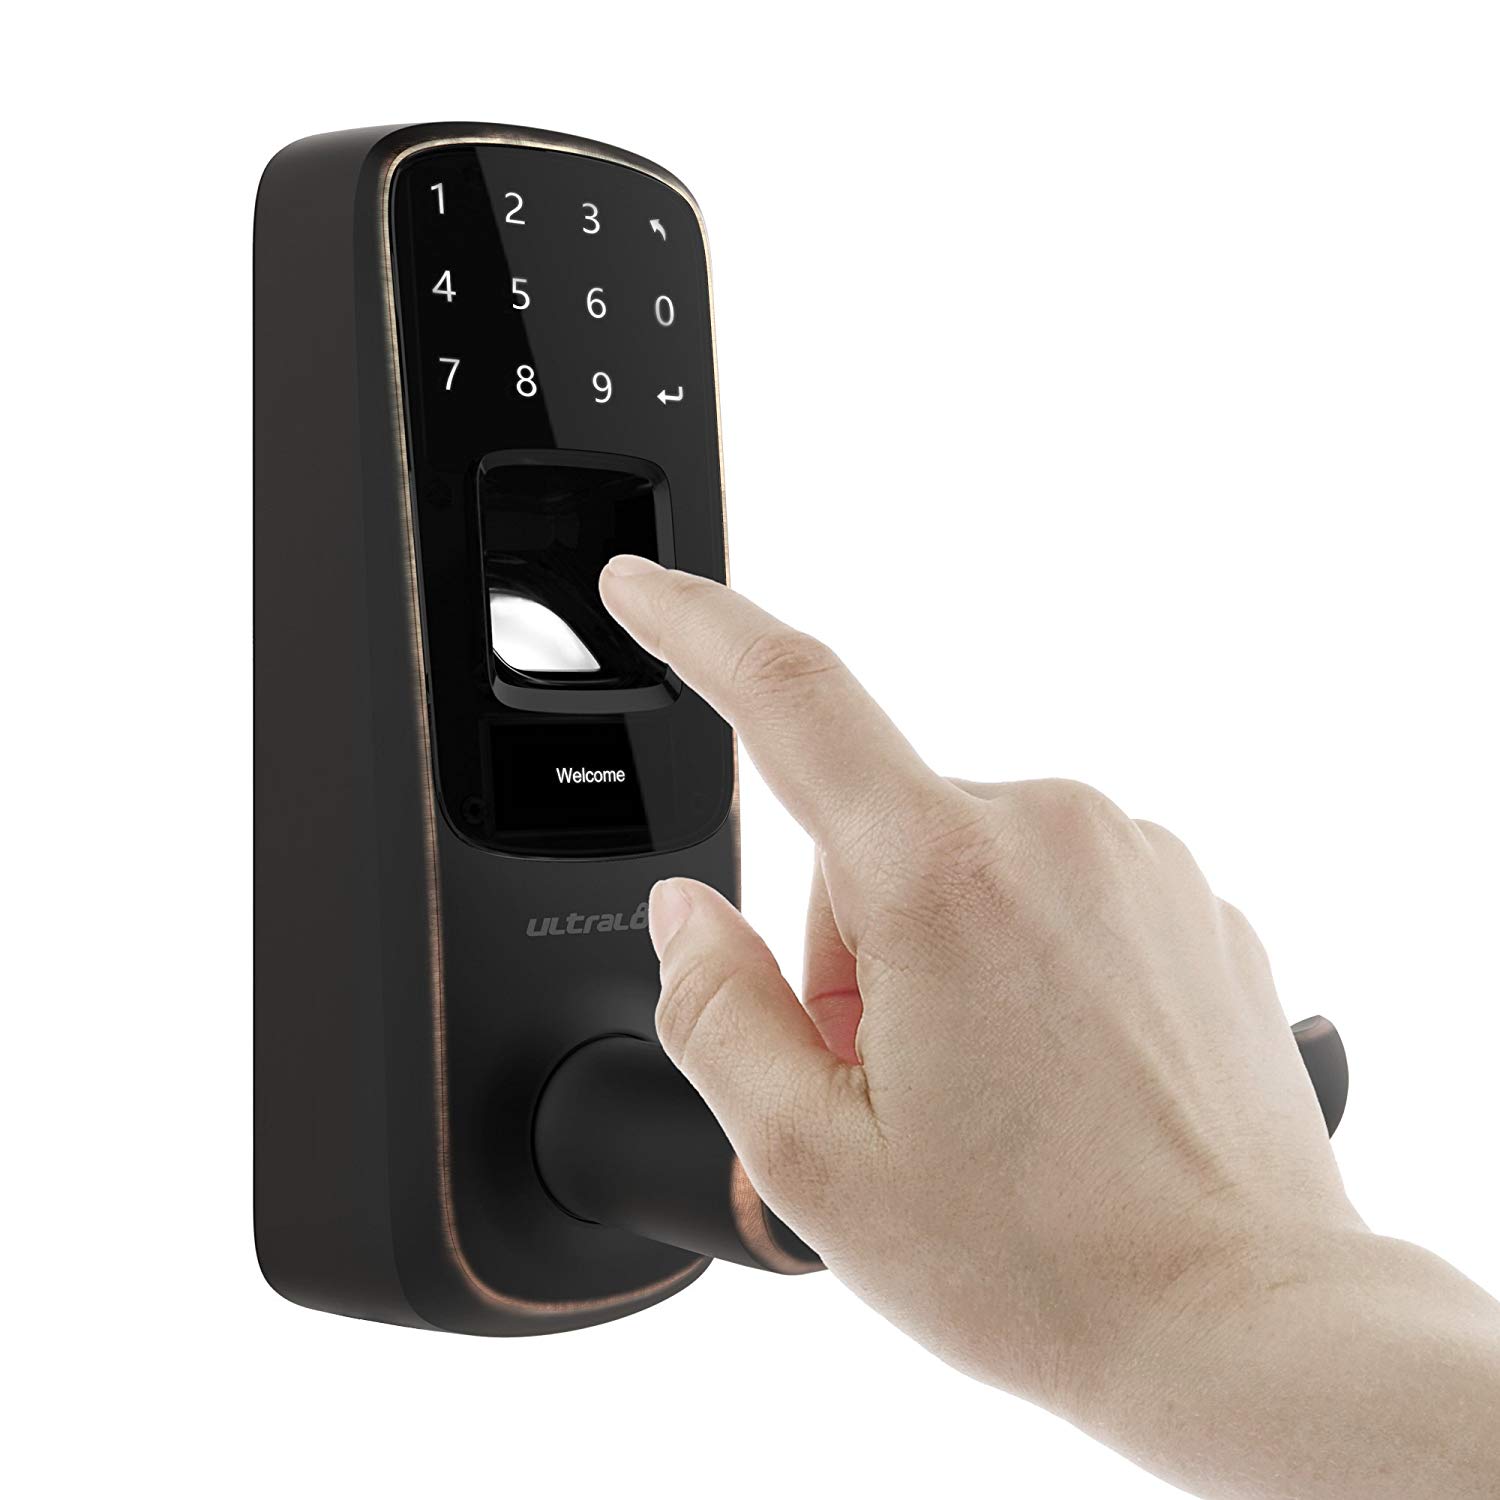 U-tec Ultraloq UL3 BT Bluetooth Enabled Fingerprint and Touchscreen Smart Lock (العمر البرونزي)